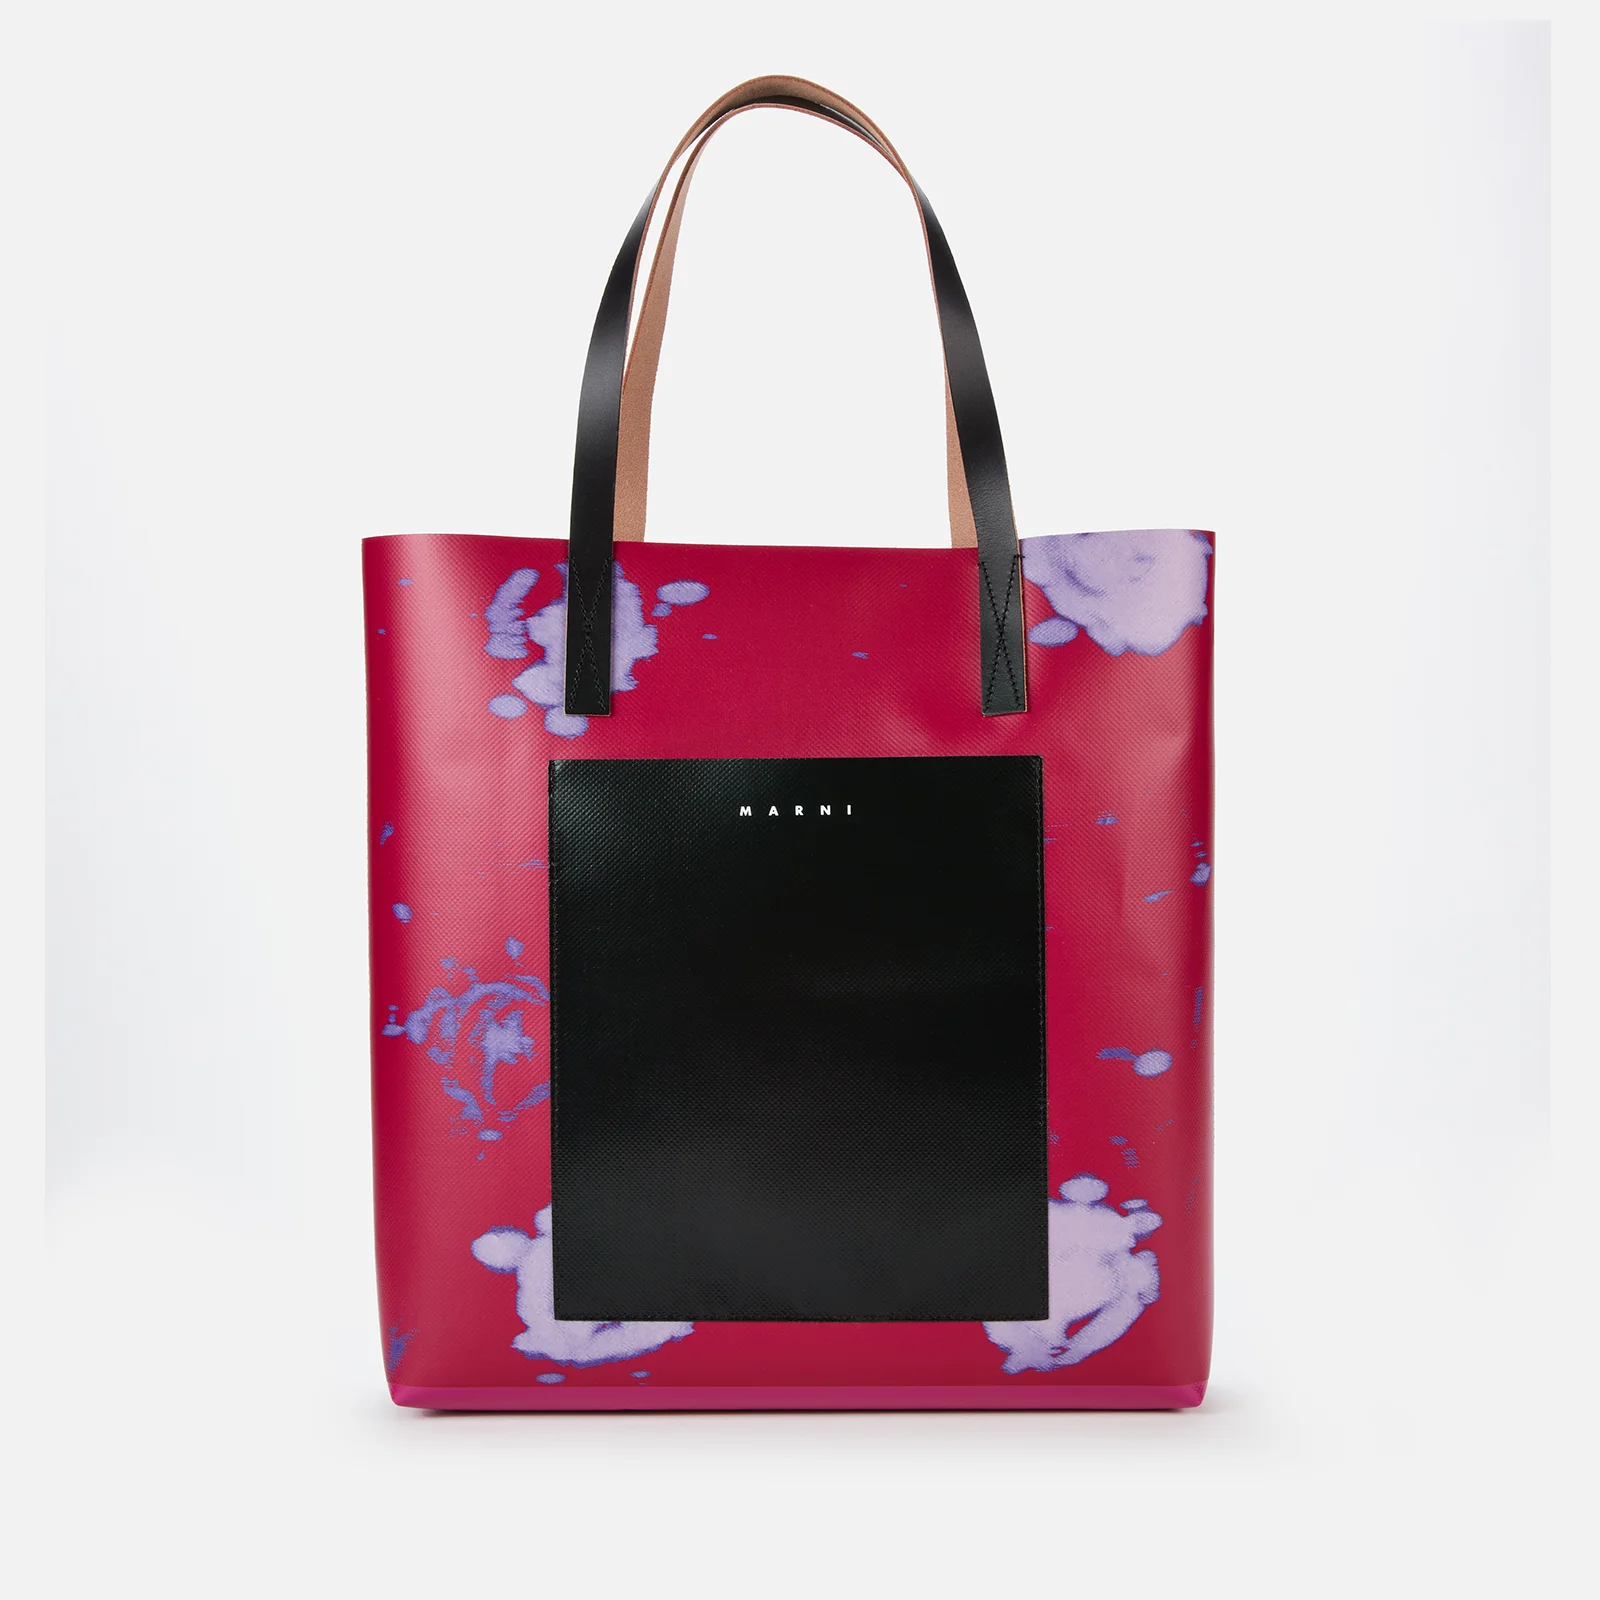 Marni Women's Pvc Faded Roses Bag - Raspberry/Black Image 1